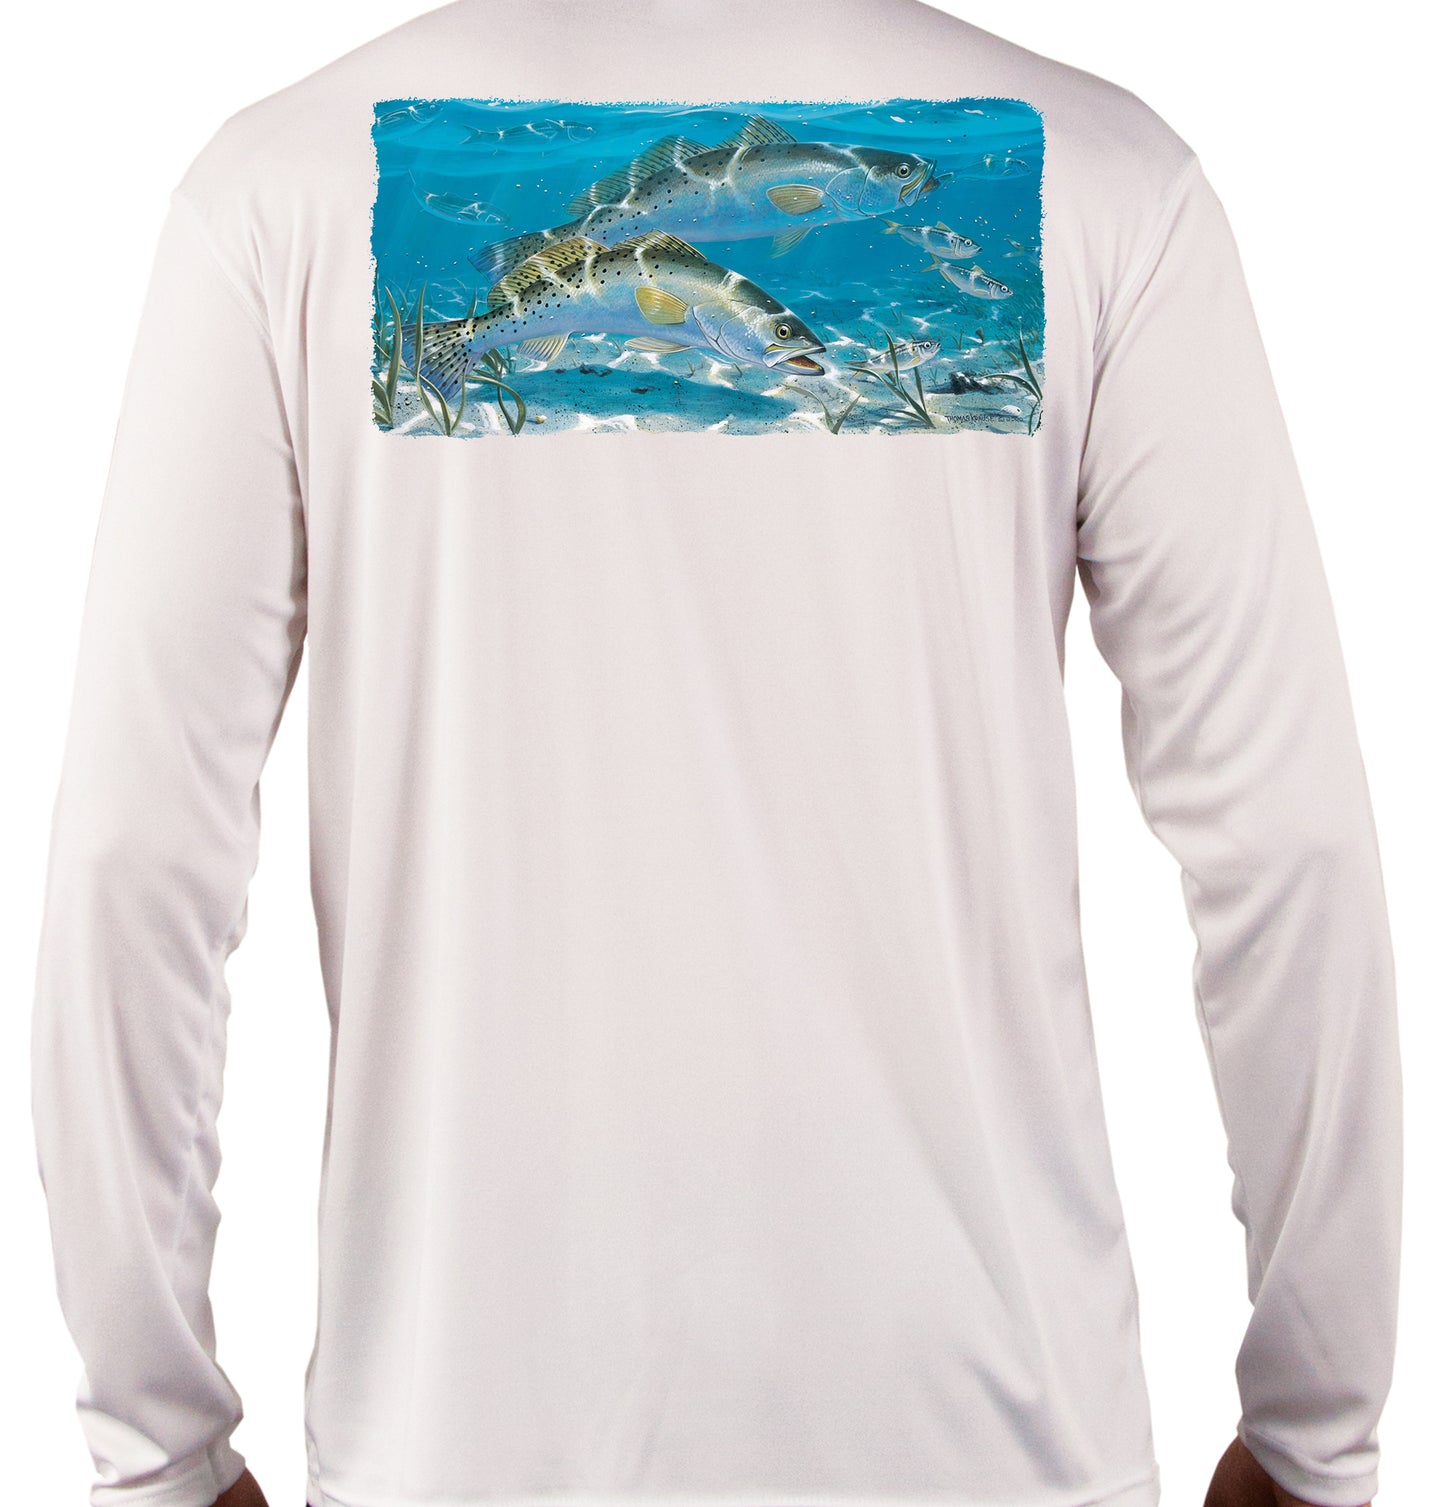 Spotted Sea Trout Chasing Baitfish Fishing Shirts Men's Quick Dry Lightweight UPF 50+ Long Sleeve Shirts Rash Guard Swim Shirts Hiking Shirts Moisture Wicking by Skiff Life - Skiff Life